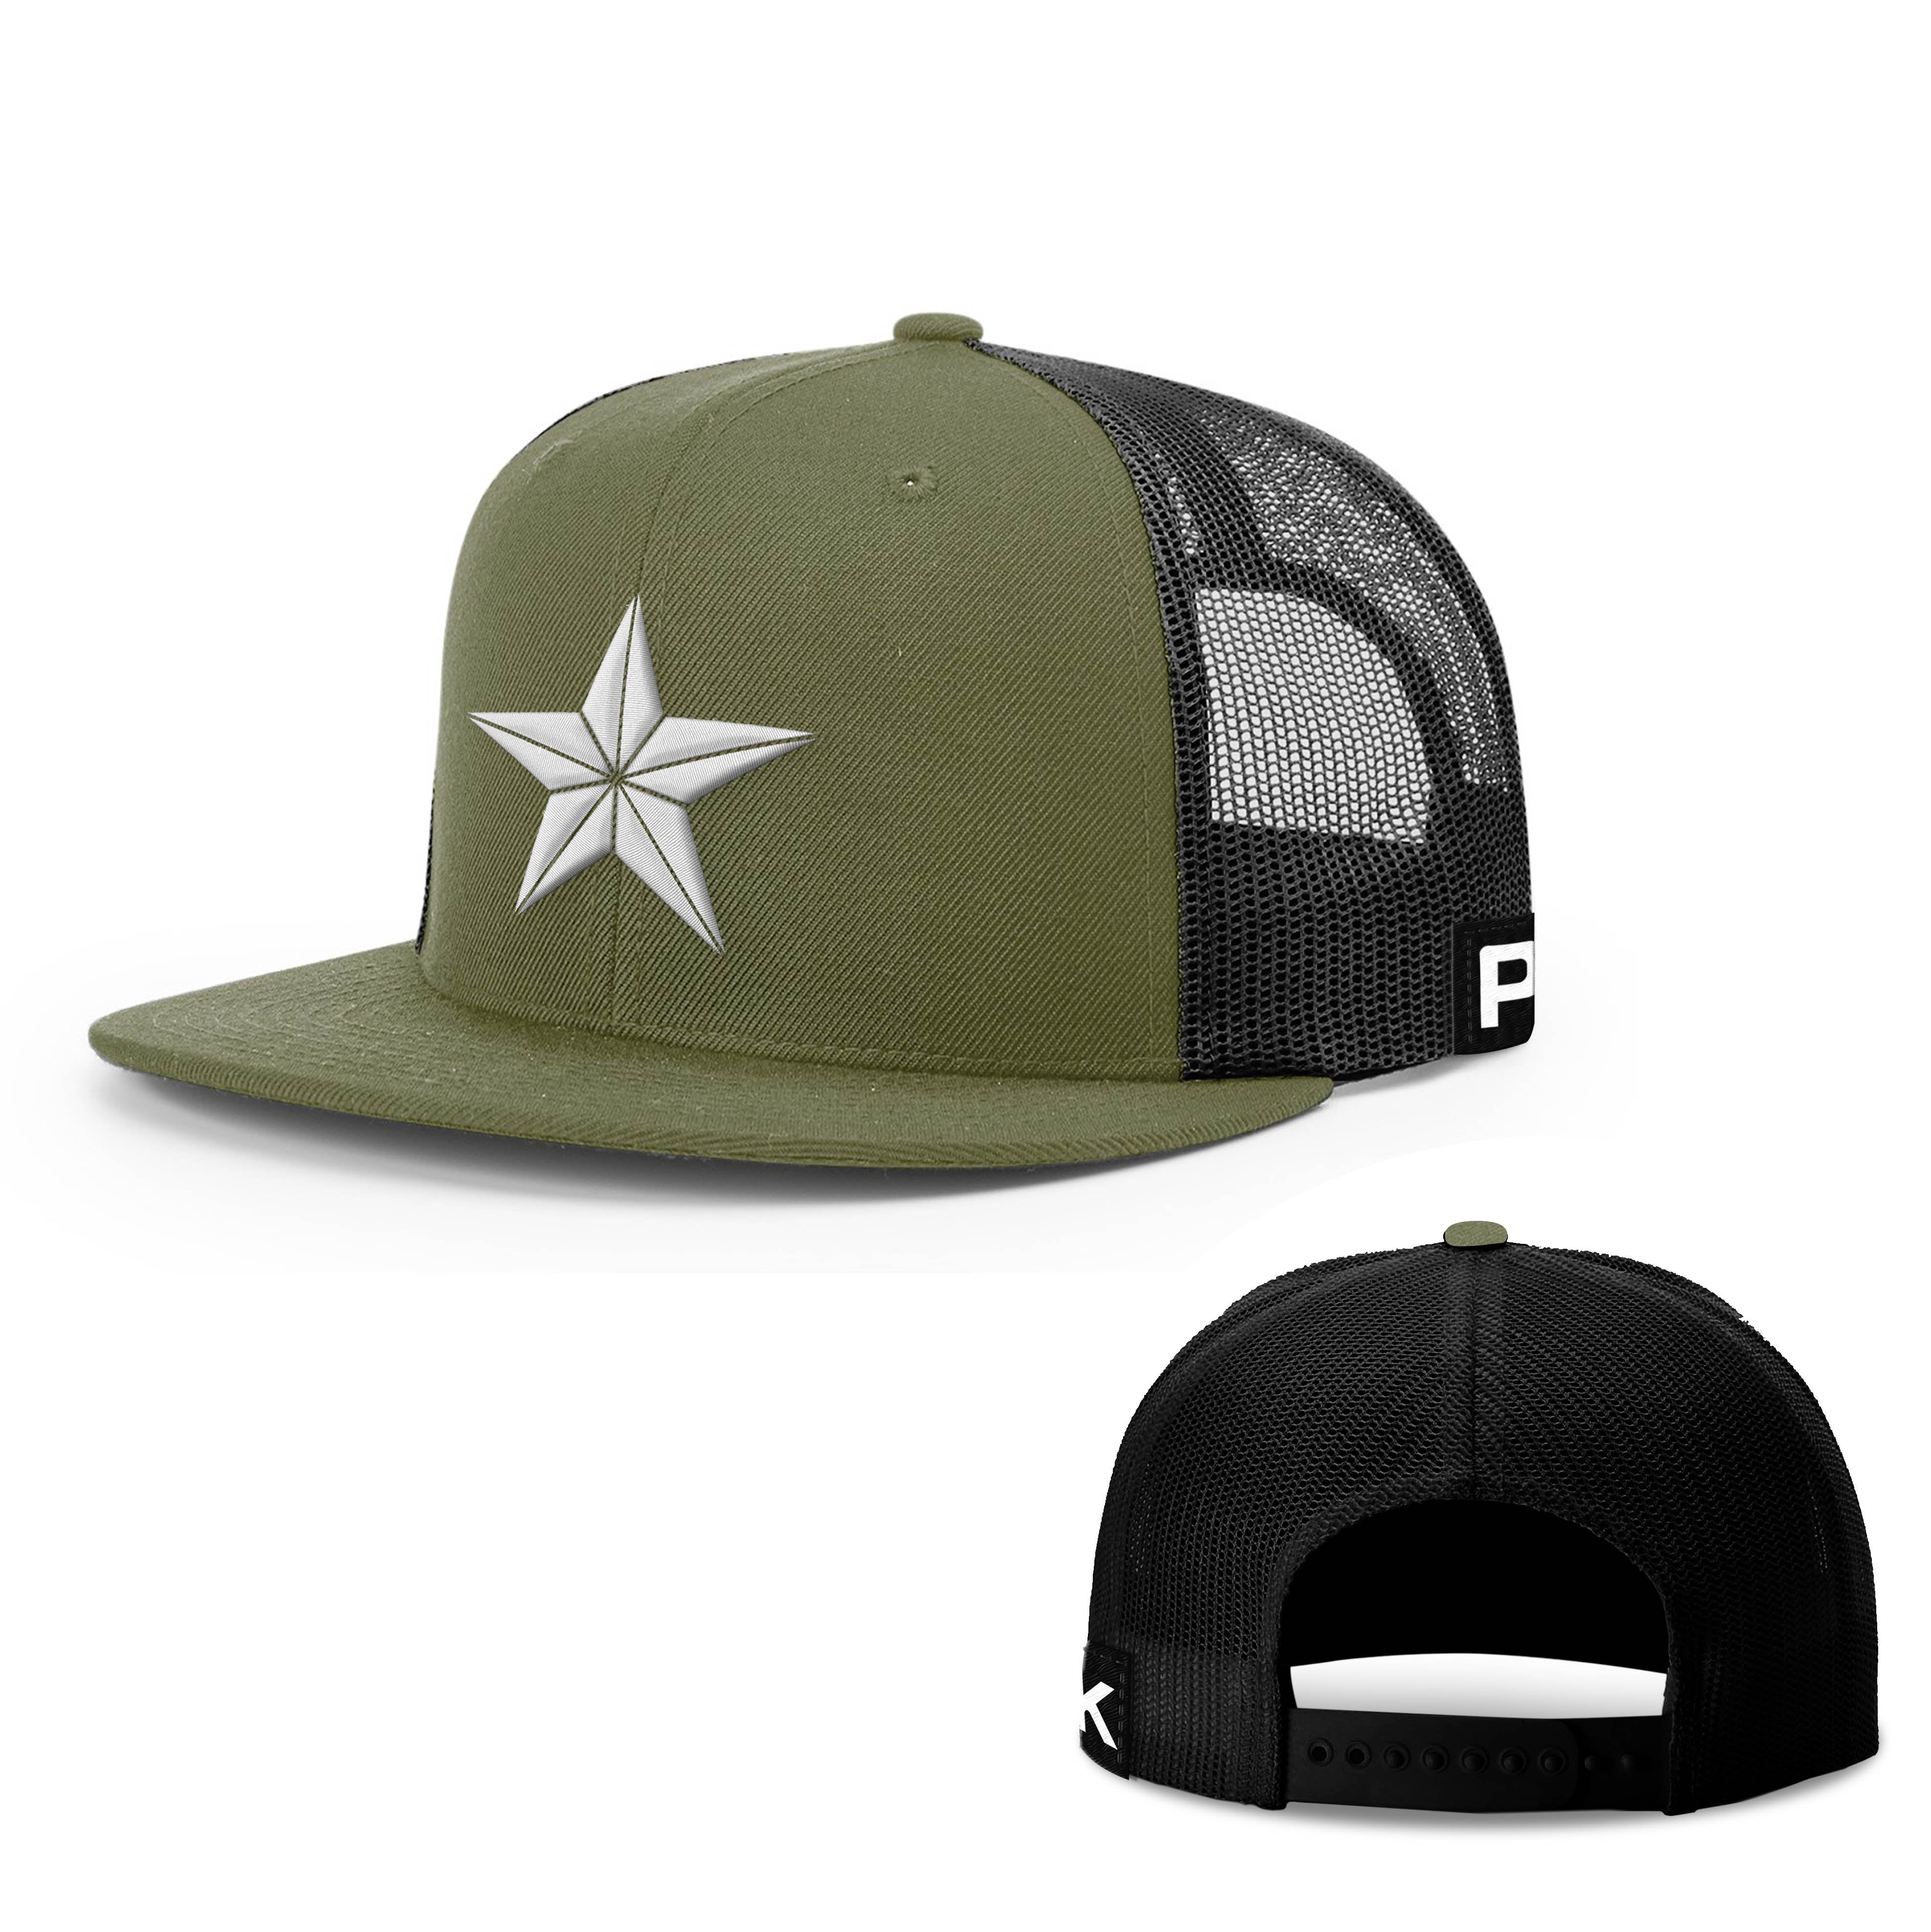 a star hat